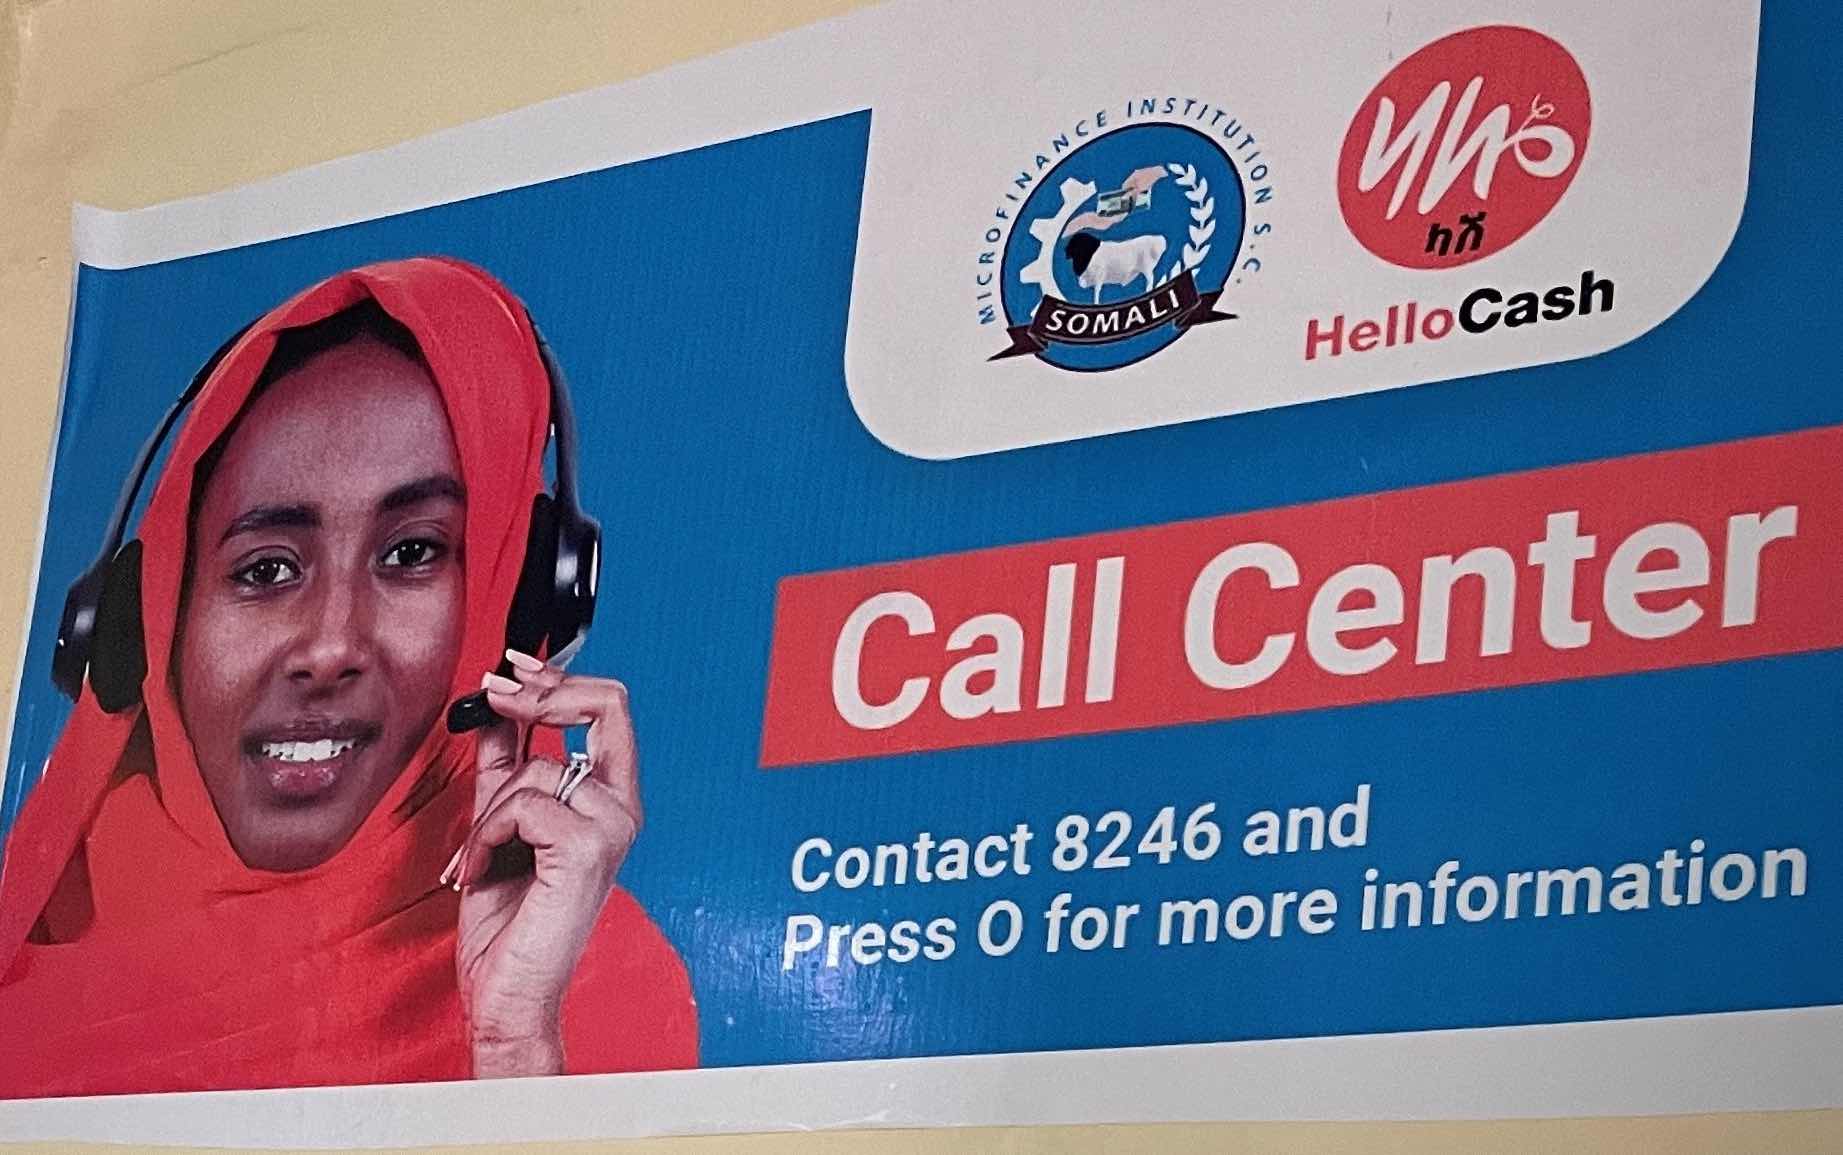 A poster for HelloCash call center